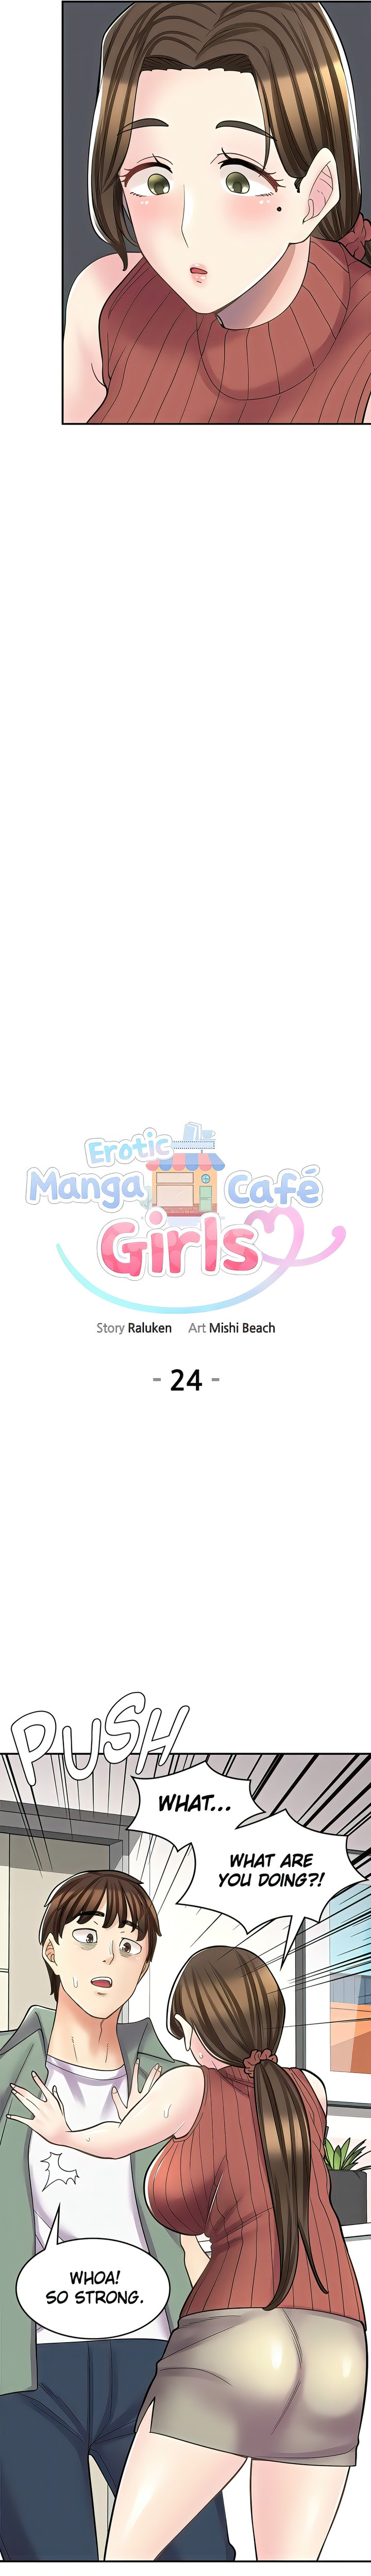 Erotic Manga Café Girls - Chapter 24 Page 2